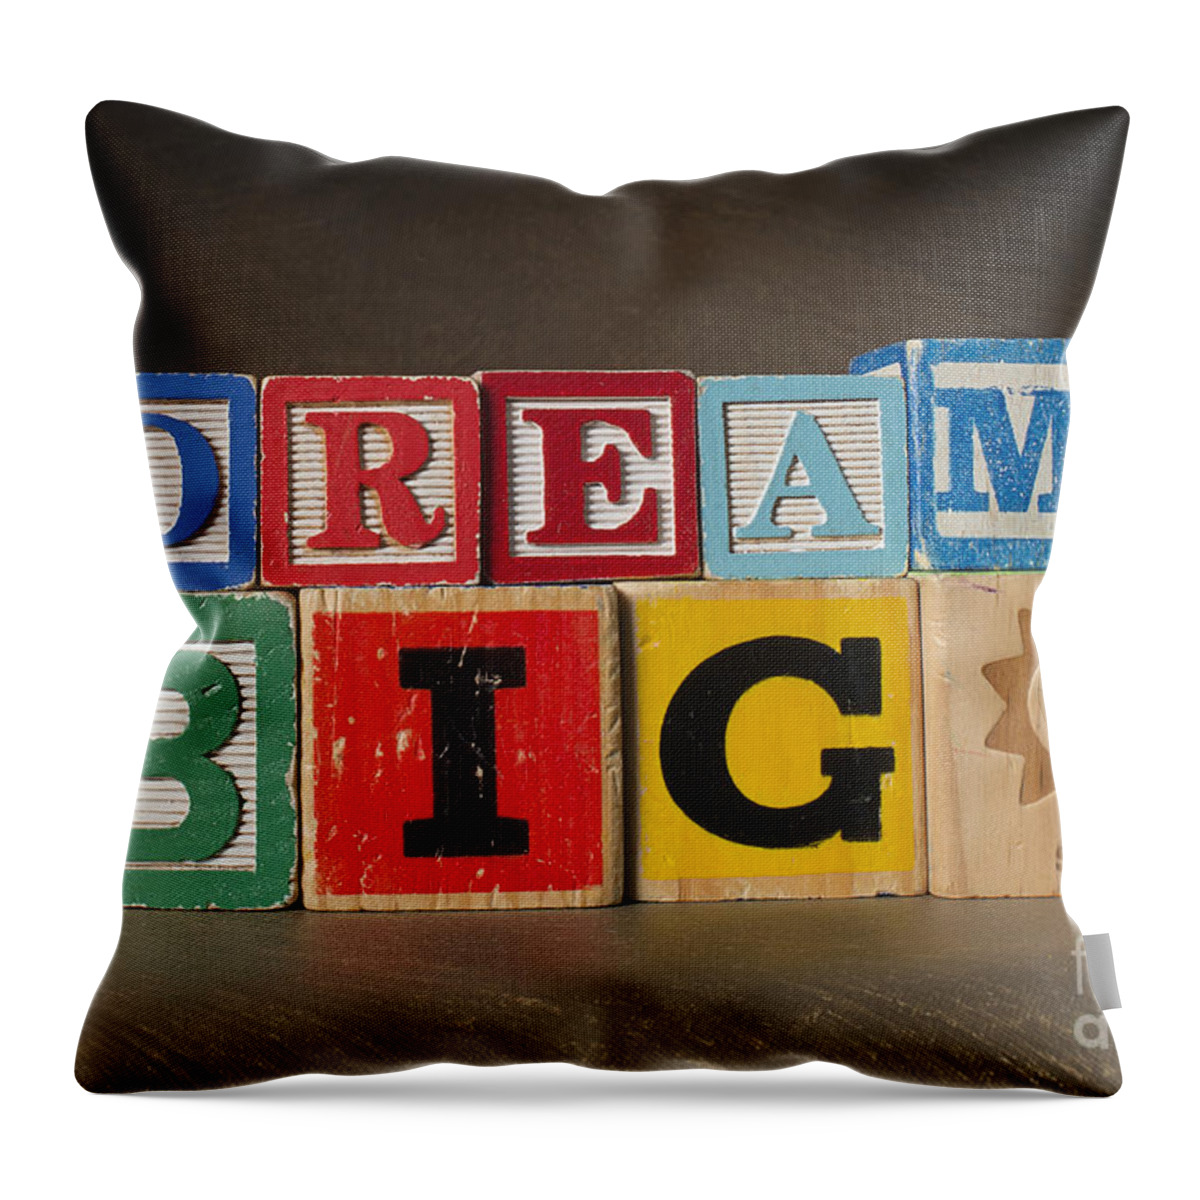 Dream Big Throw Pillow featuring the photograph Dream Big by Art Whitton